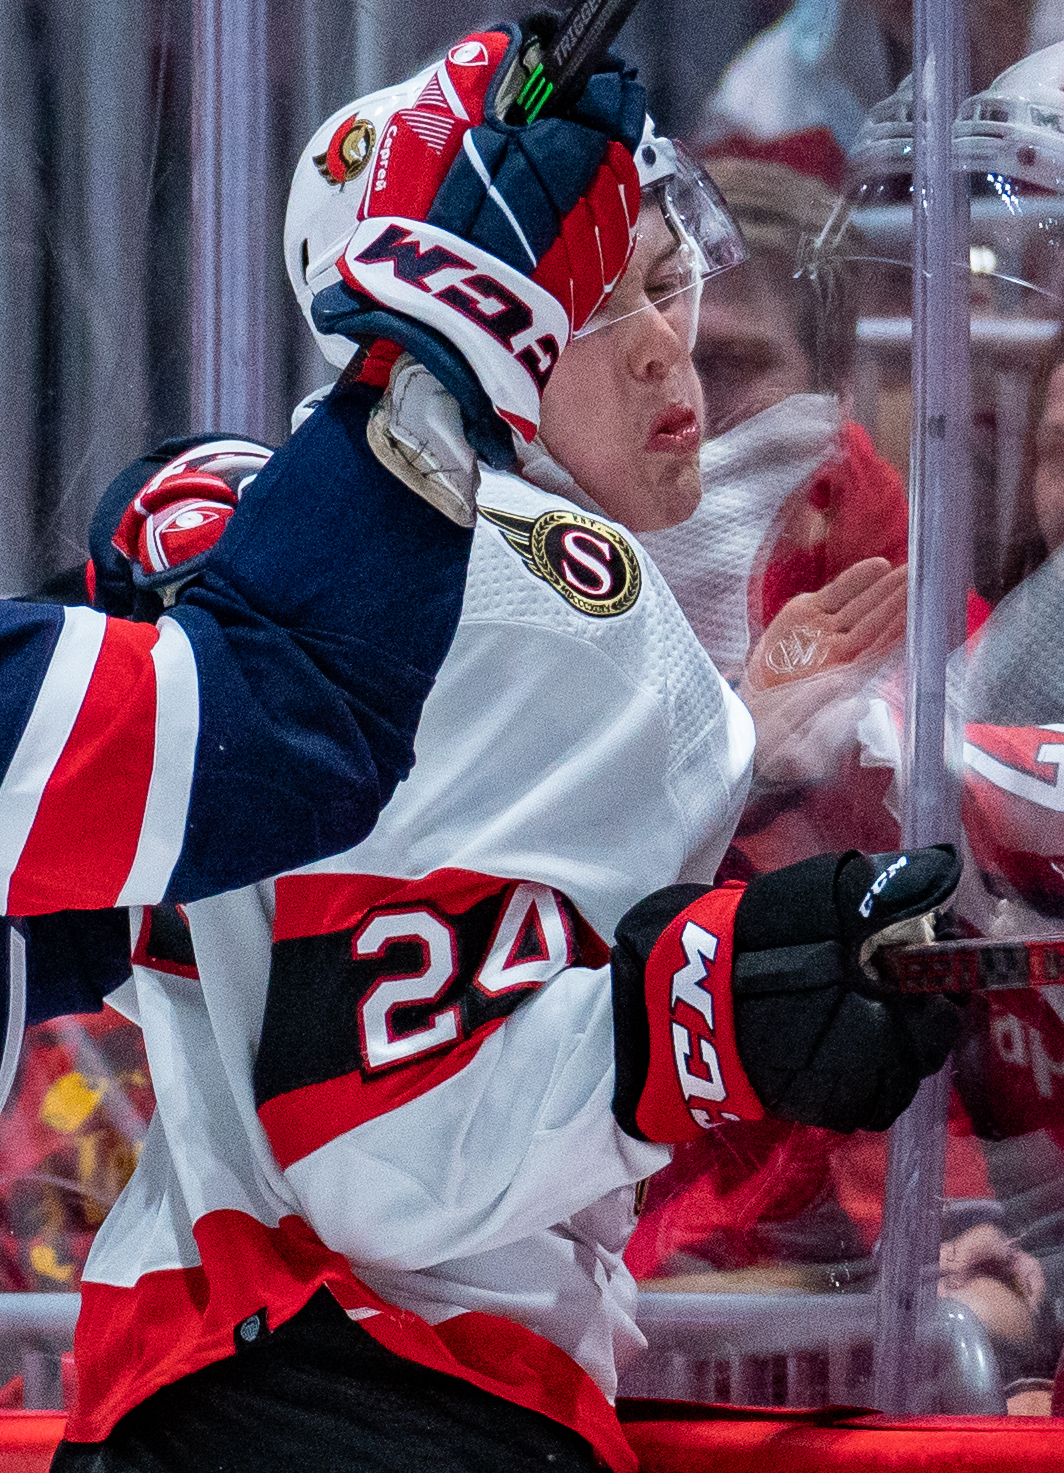 Thomas Chabot named Canada's captain for men's world hockey championship 